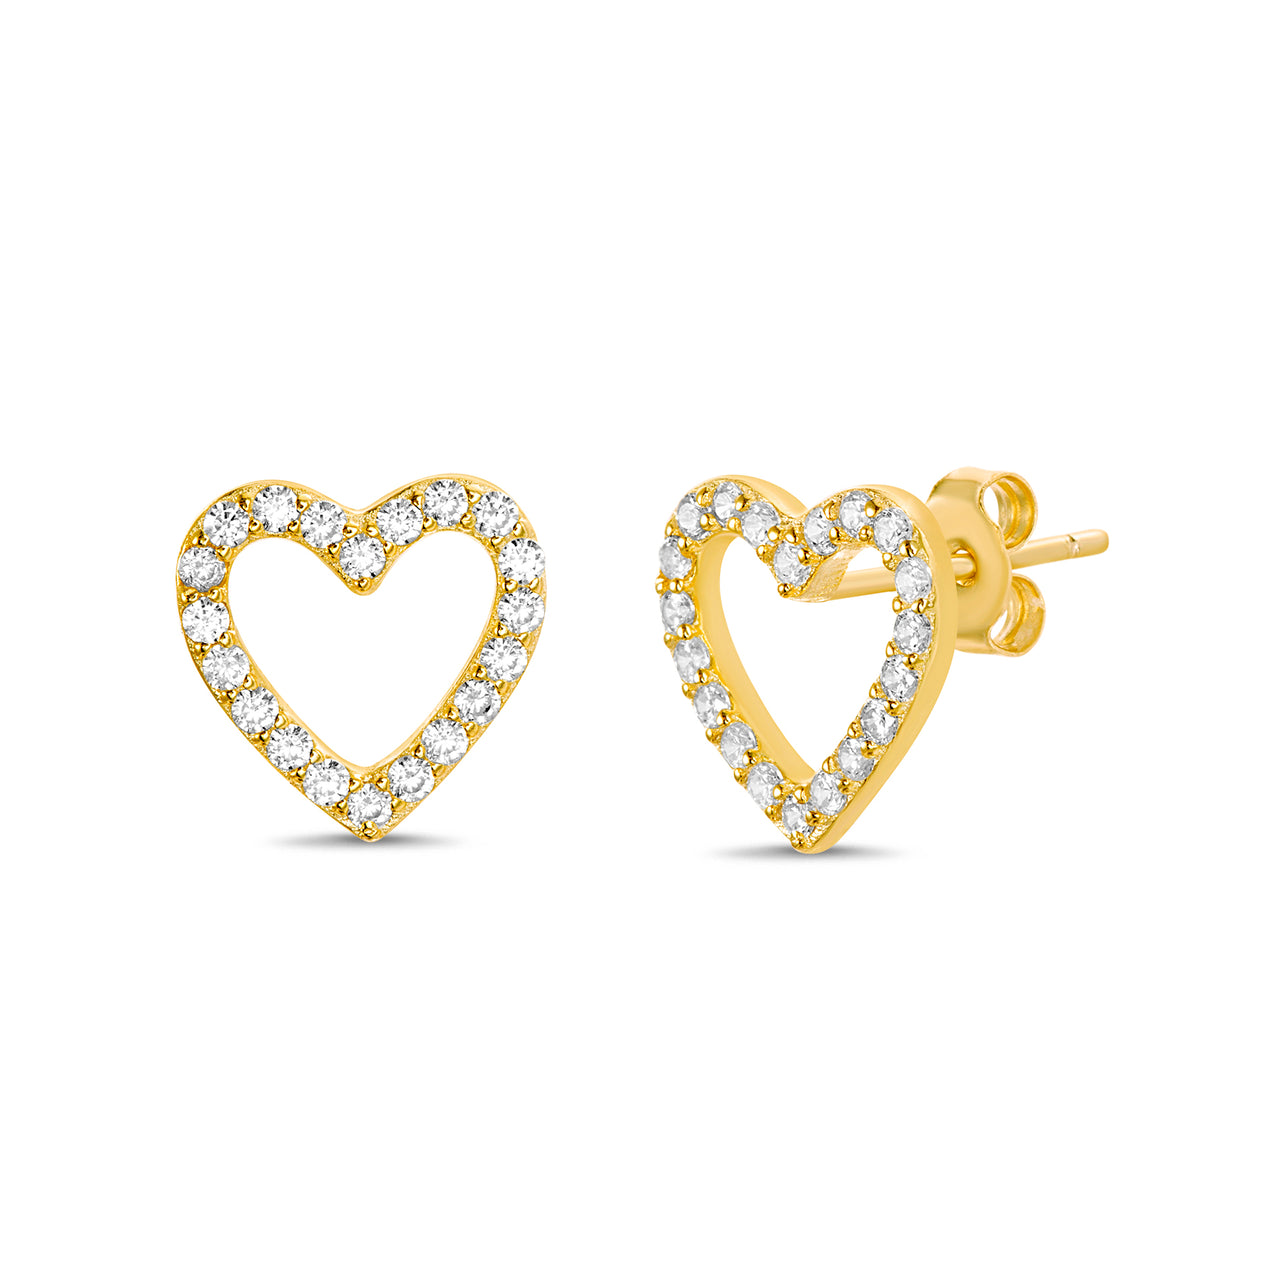 Lesa Michele Cubic Zirconia Open Heart Stud Earrings In Yellow Gold Plated Sterling Silver